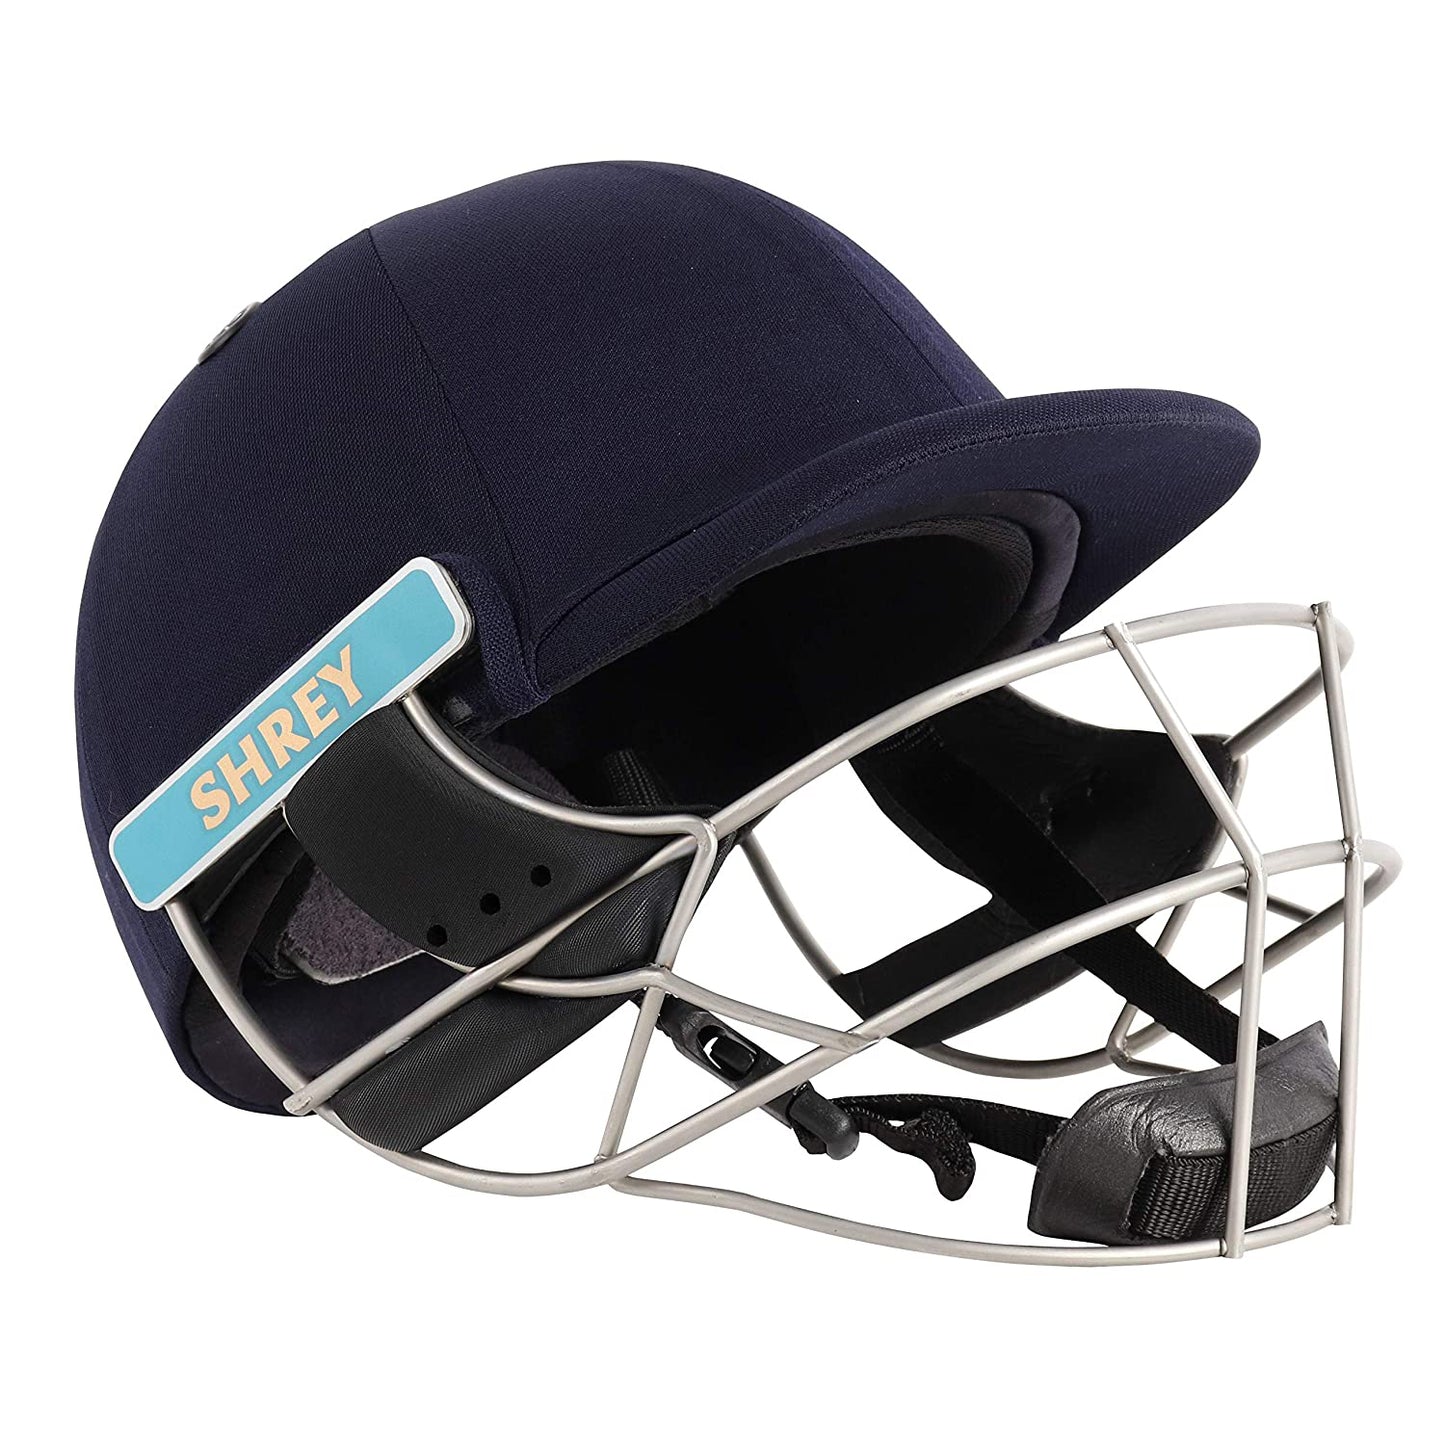 Shrey Master Class Air Stainless Steel Helmet, Navy - Best Price online Prokicksports.com